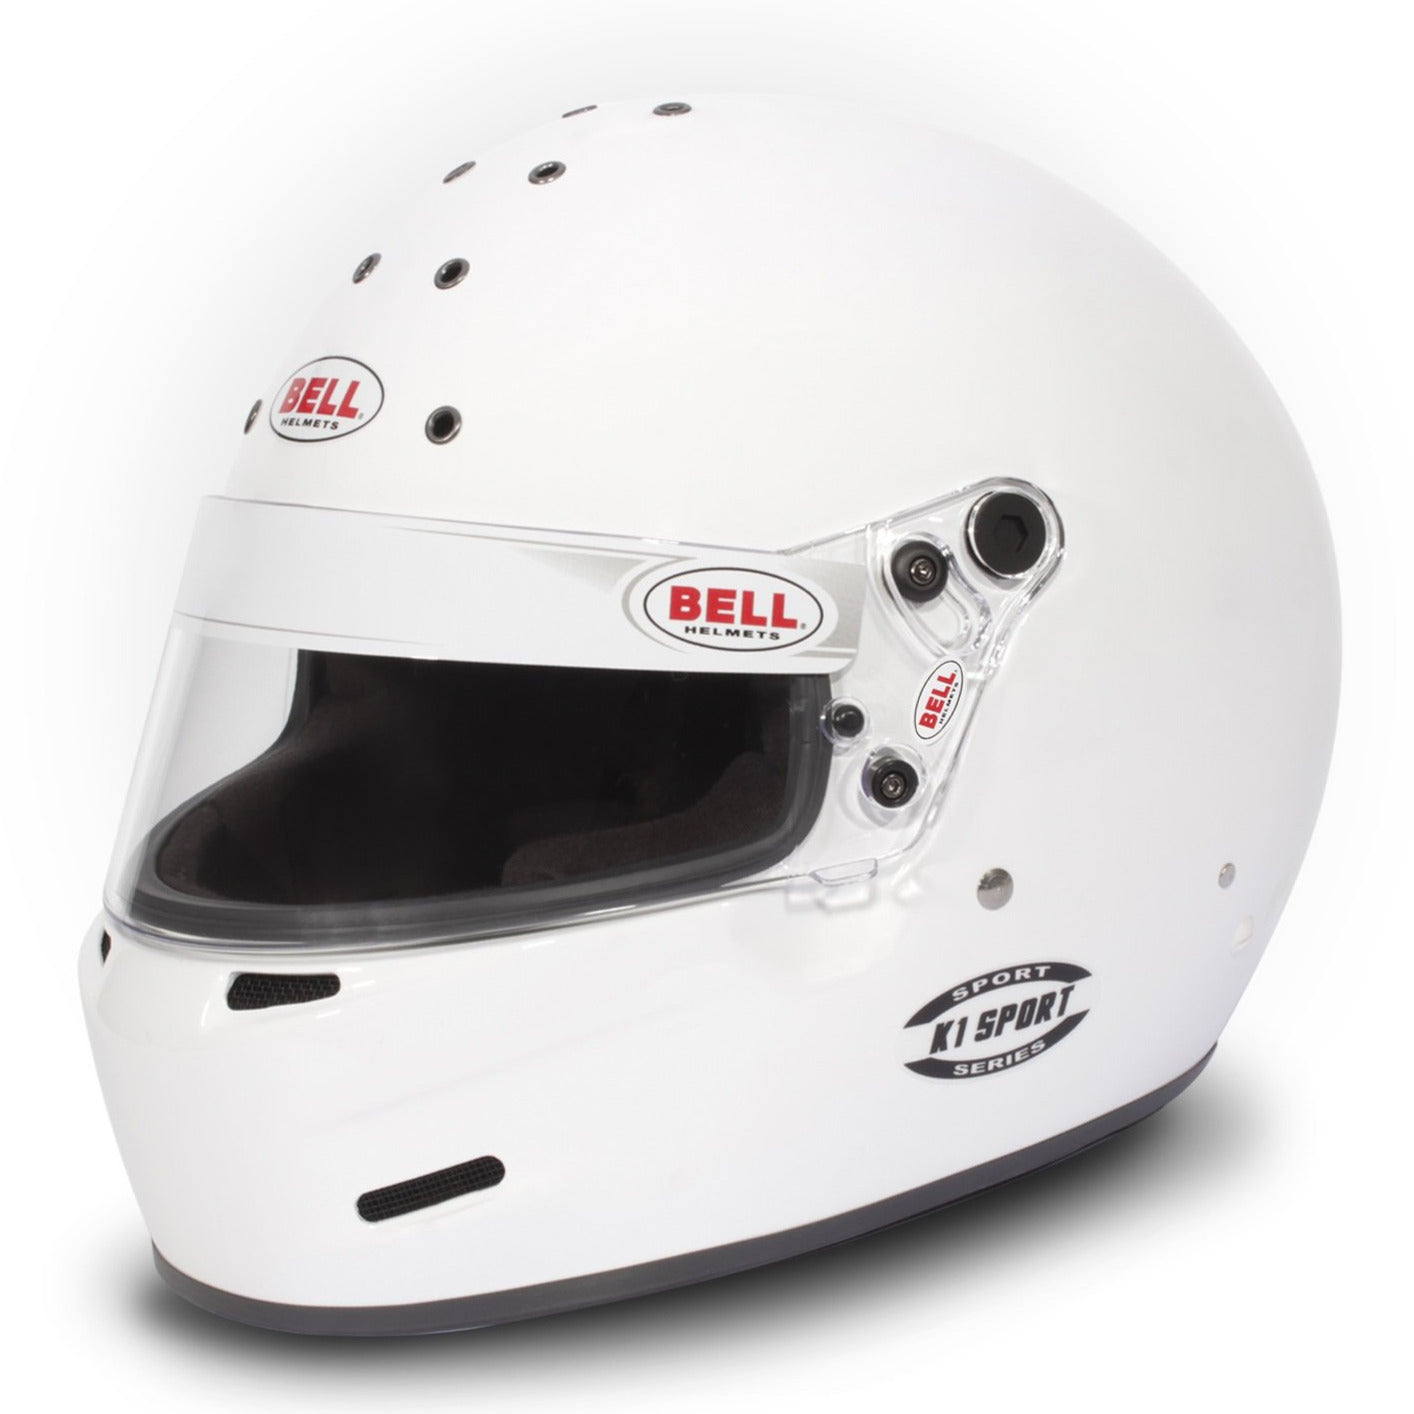 Bell K1 Sport Helmet